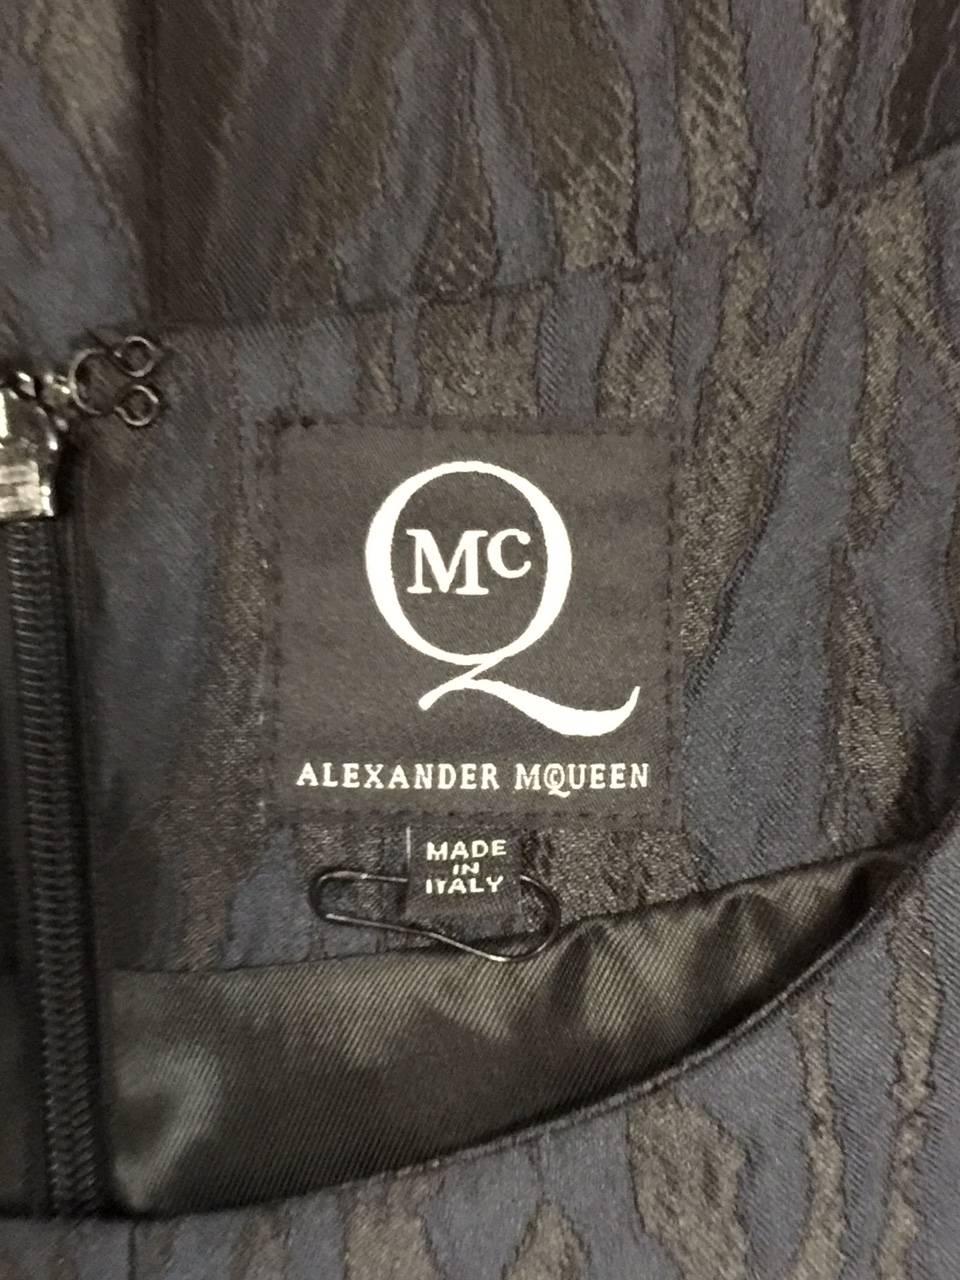 Alexander McQueen Black and Blue Brocade Blouse With Peplum Sz 46 1